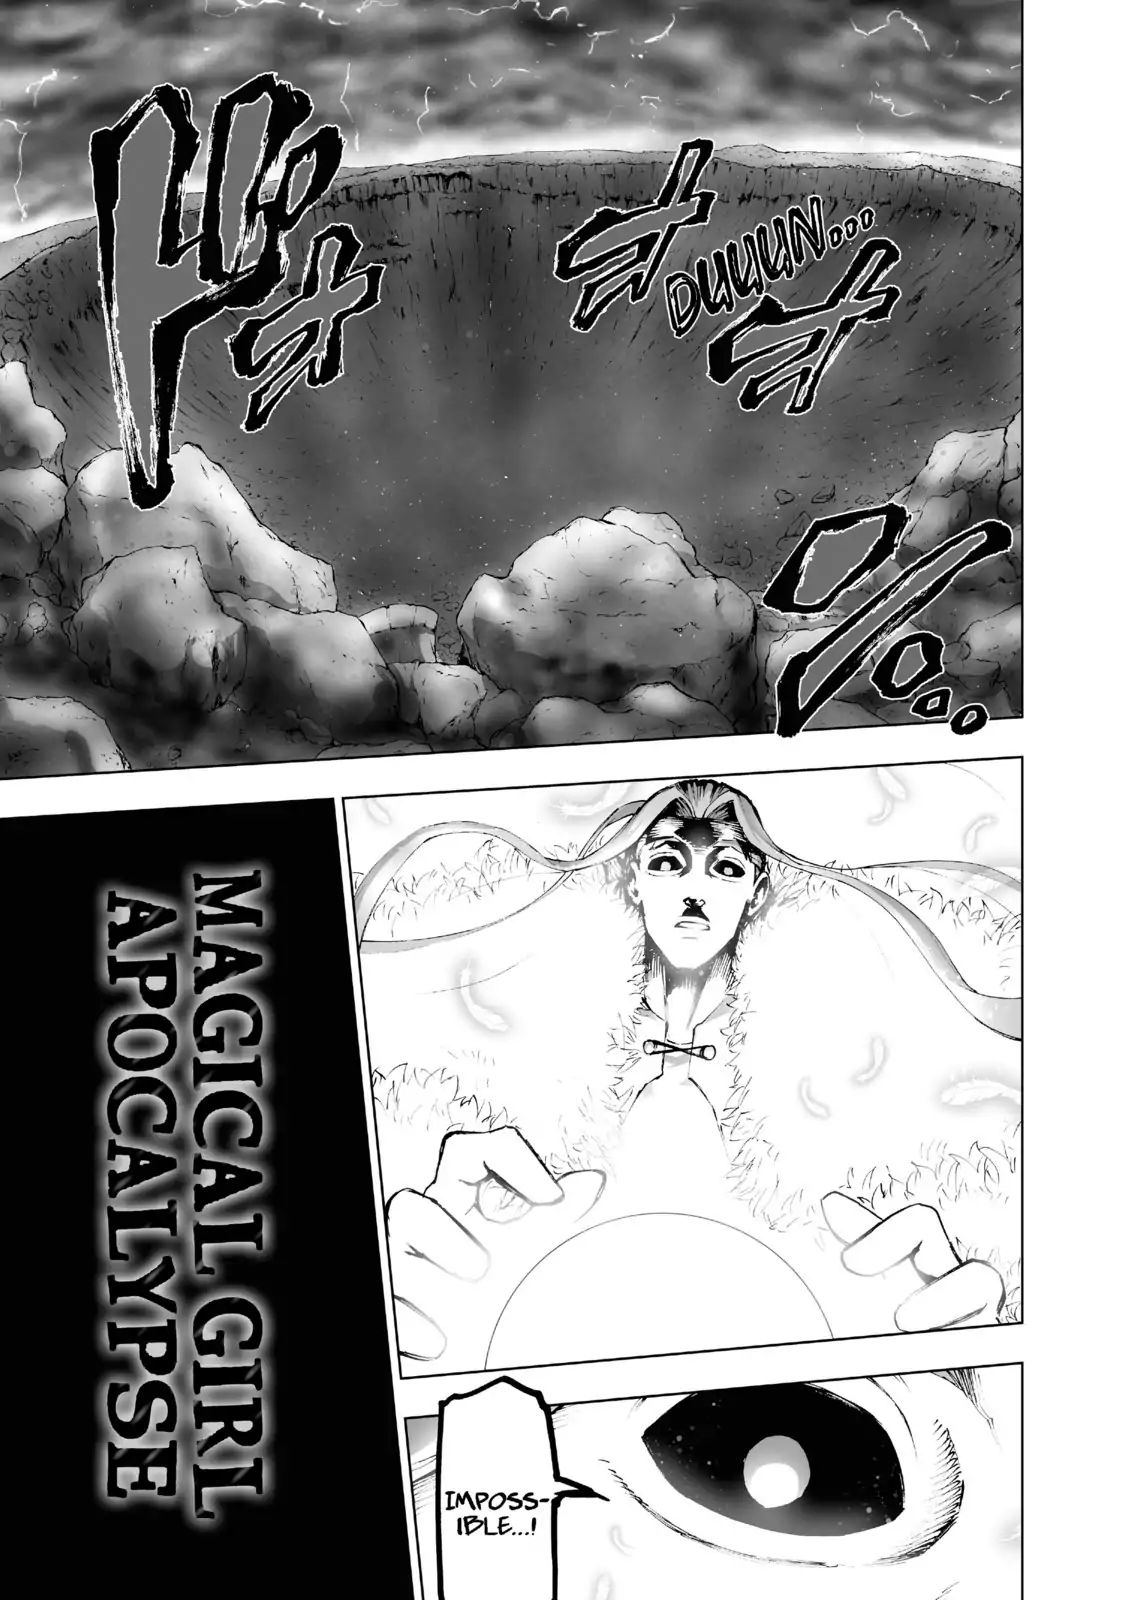 Mahou Shoujo Of The End - Page 1